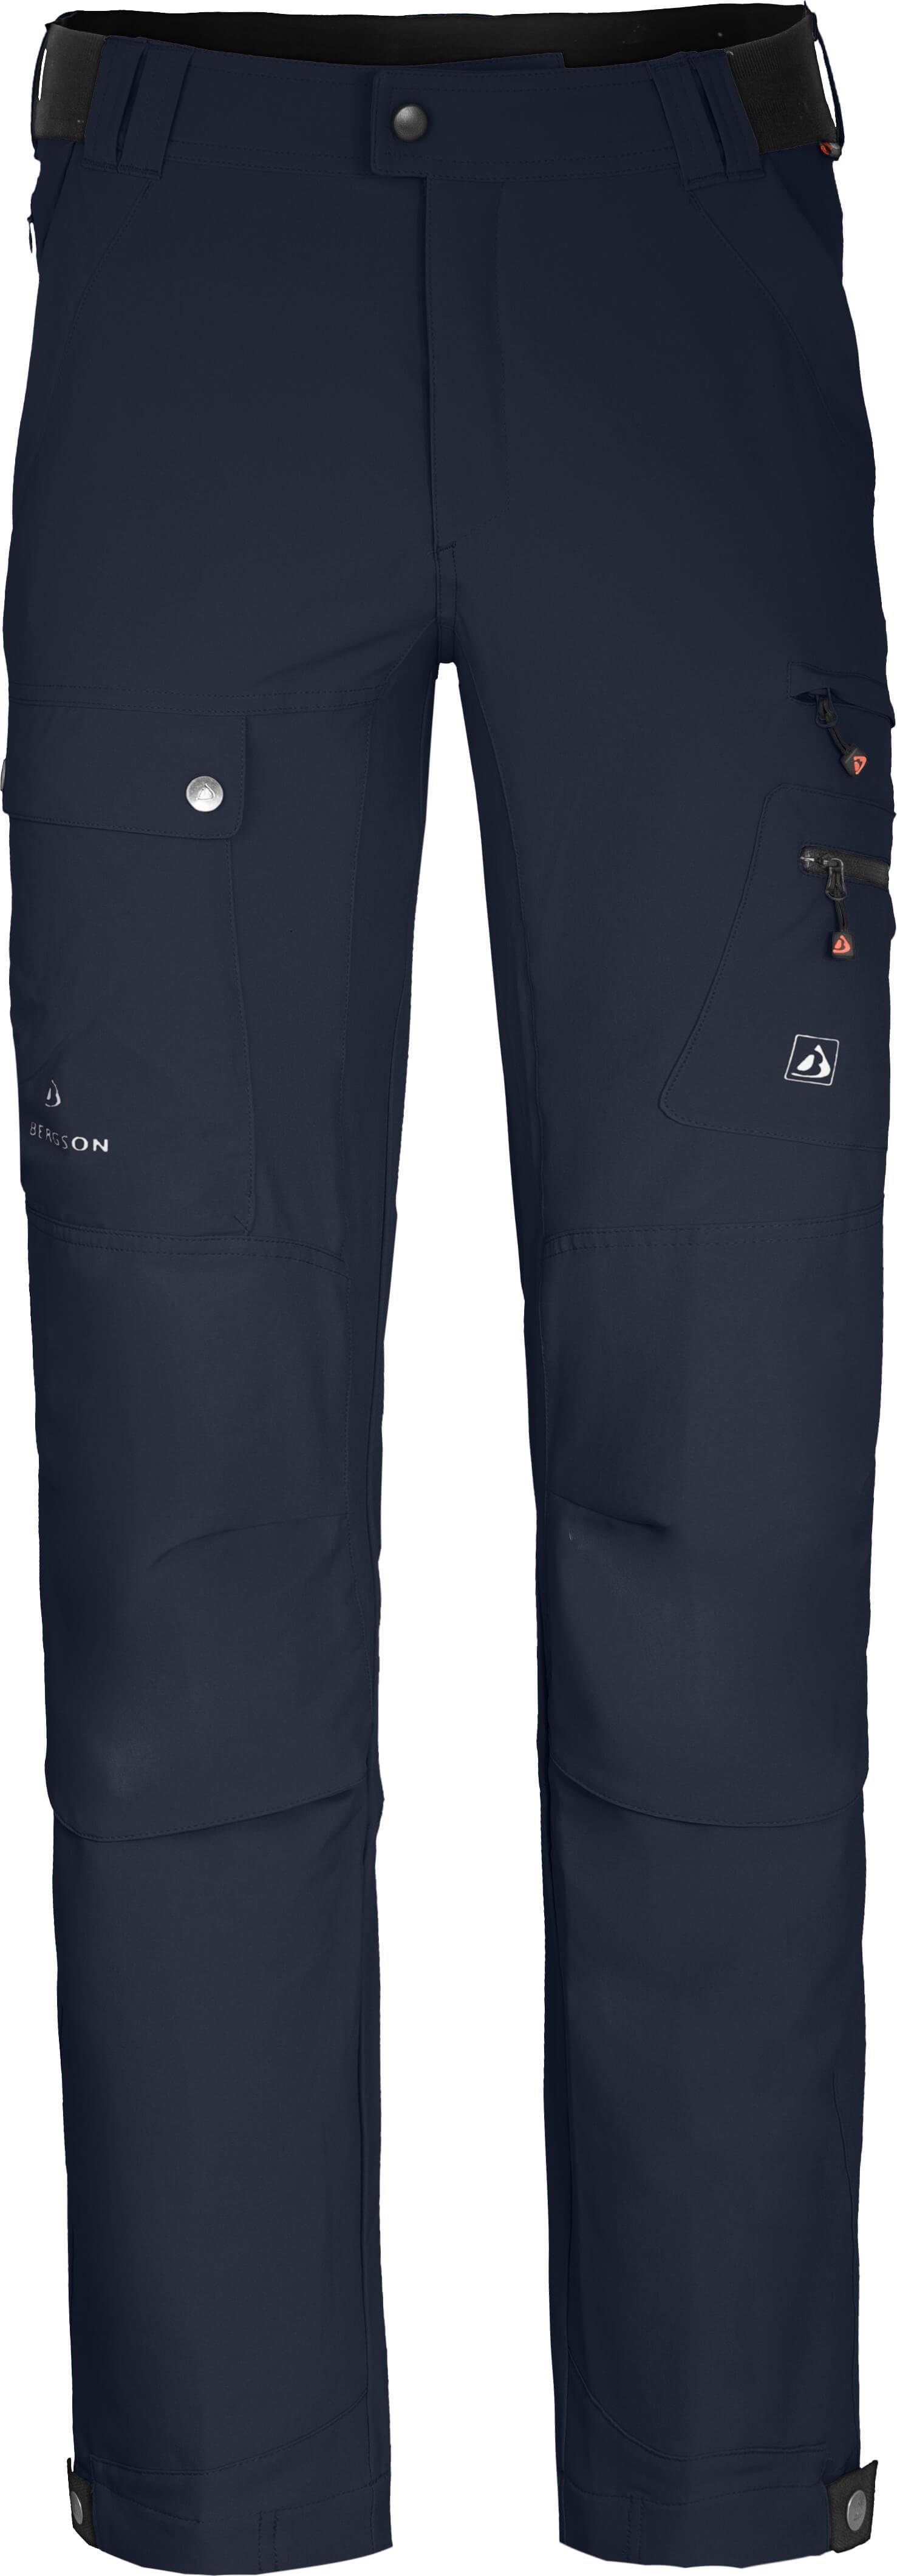 Bergson Outdoorhose FROSLEV COMFORT Herren Wanderhose, recycelt, elastisch, 8 Taschen, Normalgrößen, navy blau | Outdoorhosen